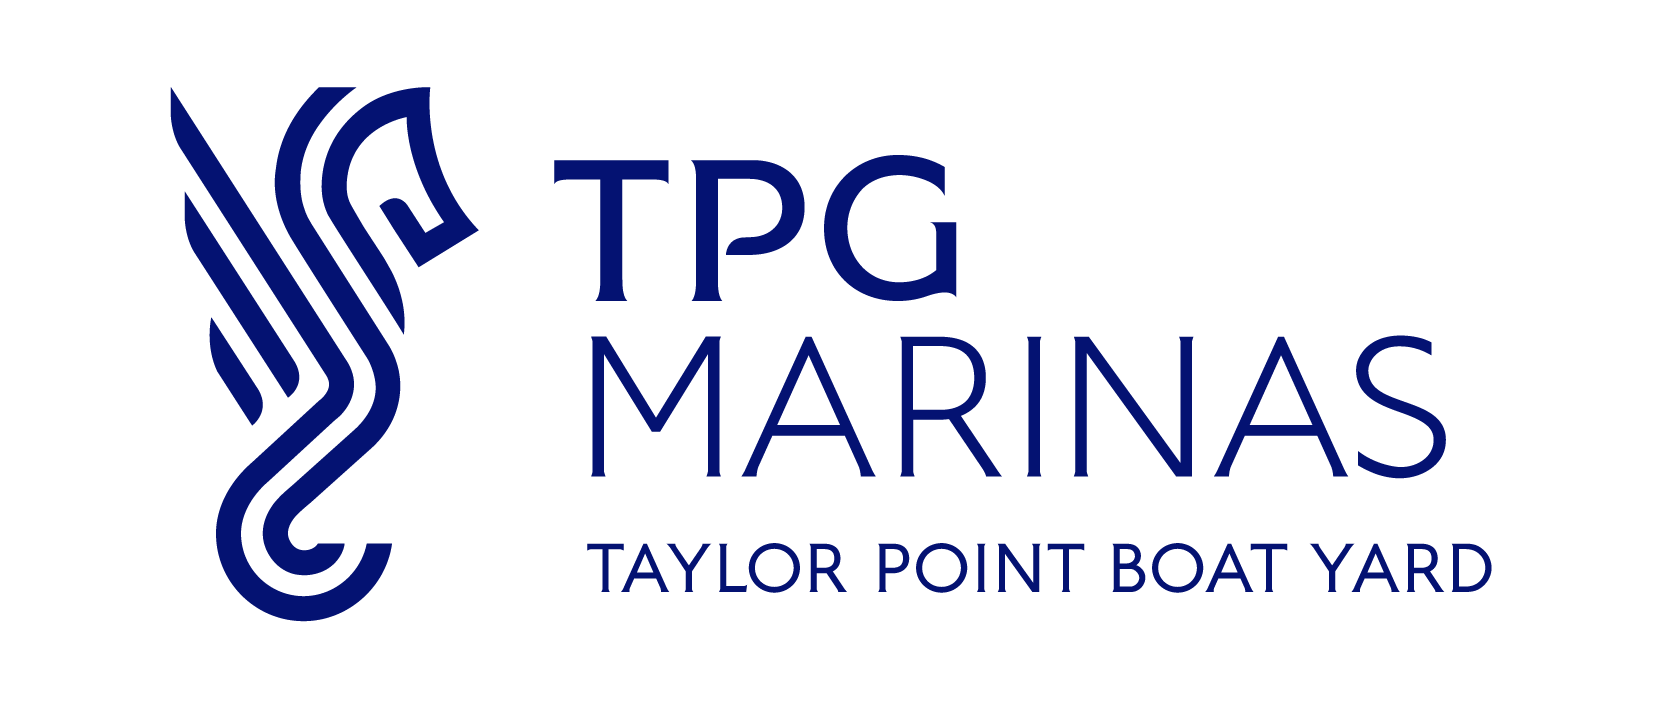 Taylor Point Boat Yard